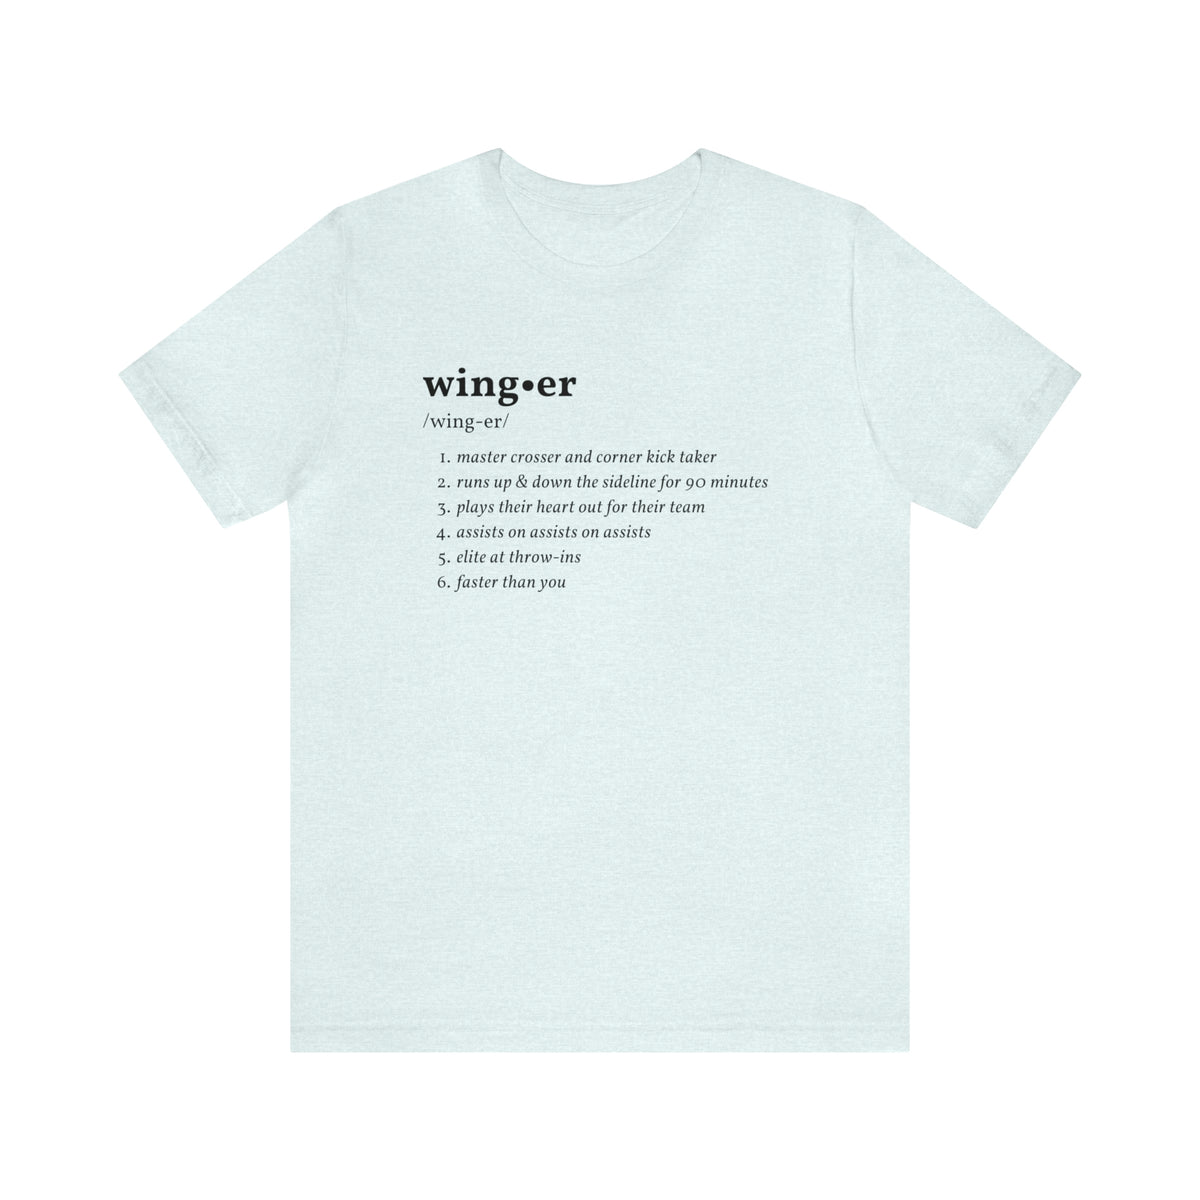 Winger Definition Adult T-Shirt